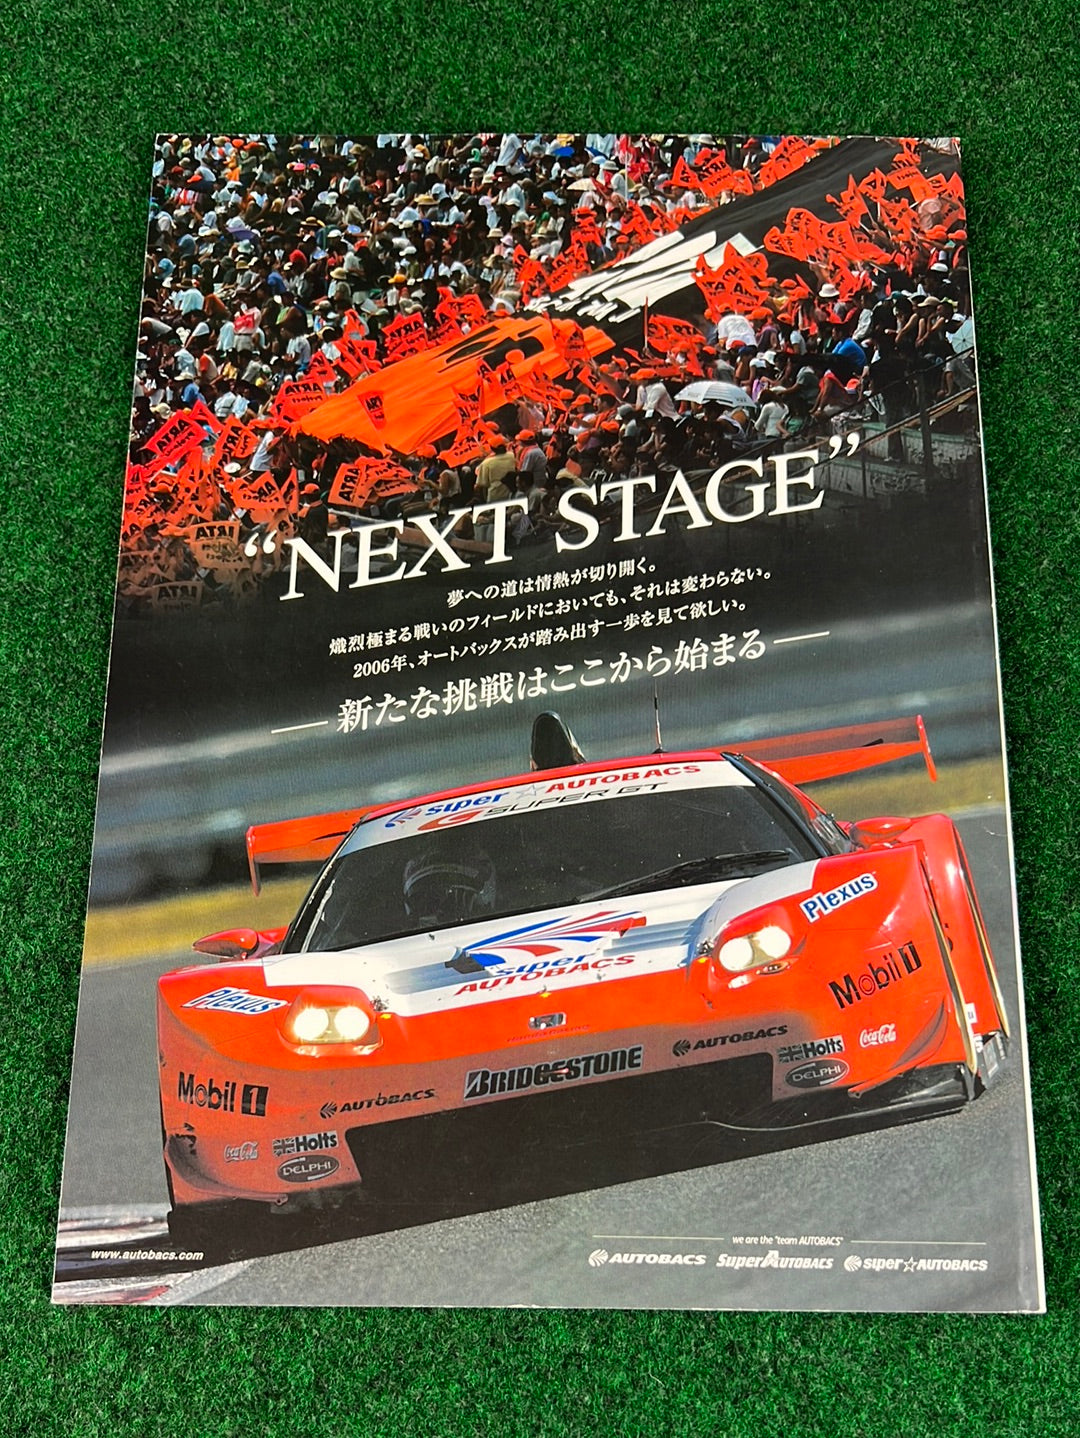 2006 Autobacs Super GT Round 1 Suzuka Circuit Official Race Day Program